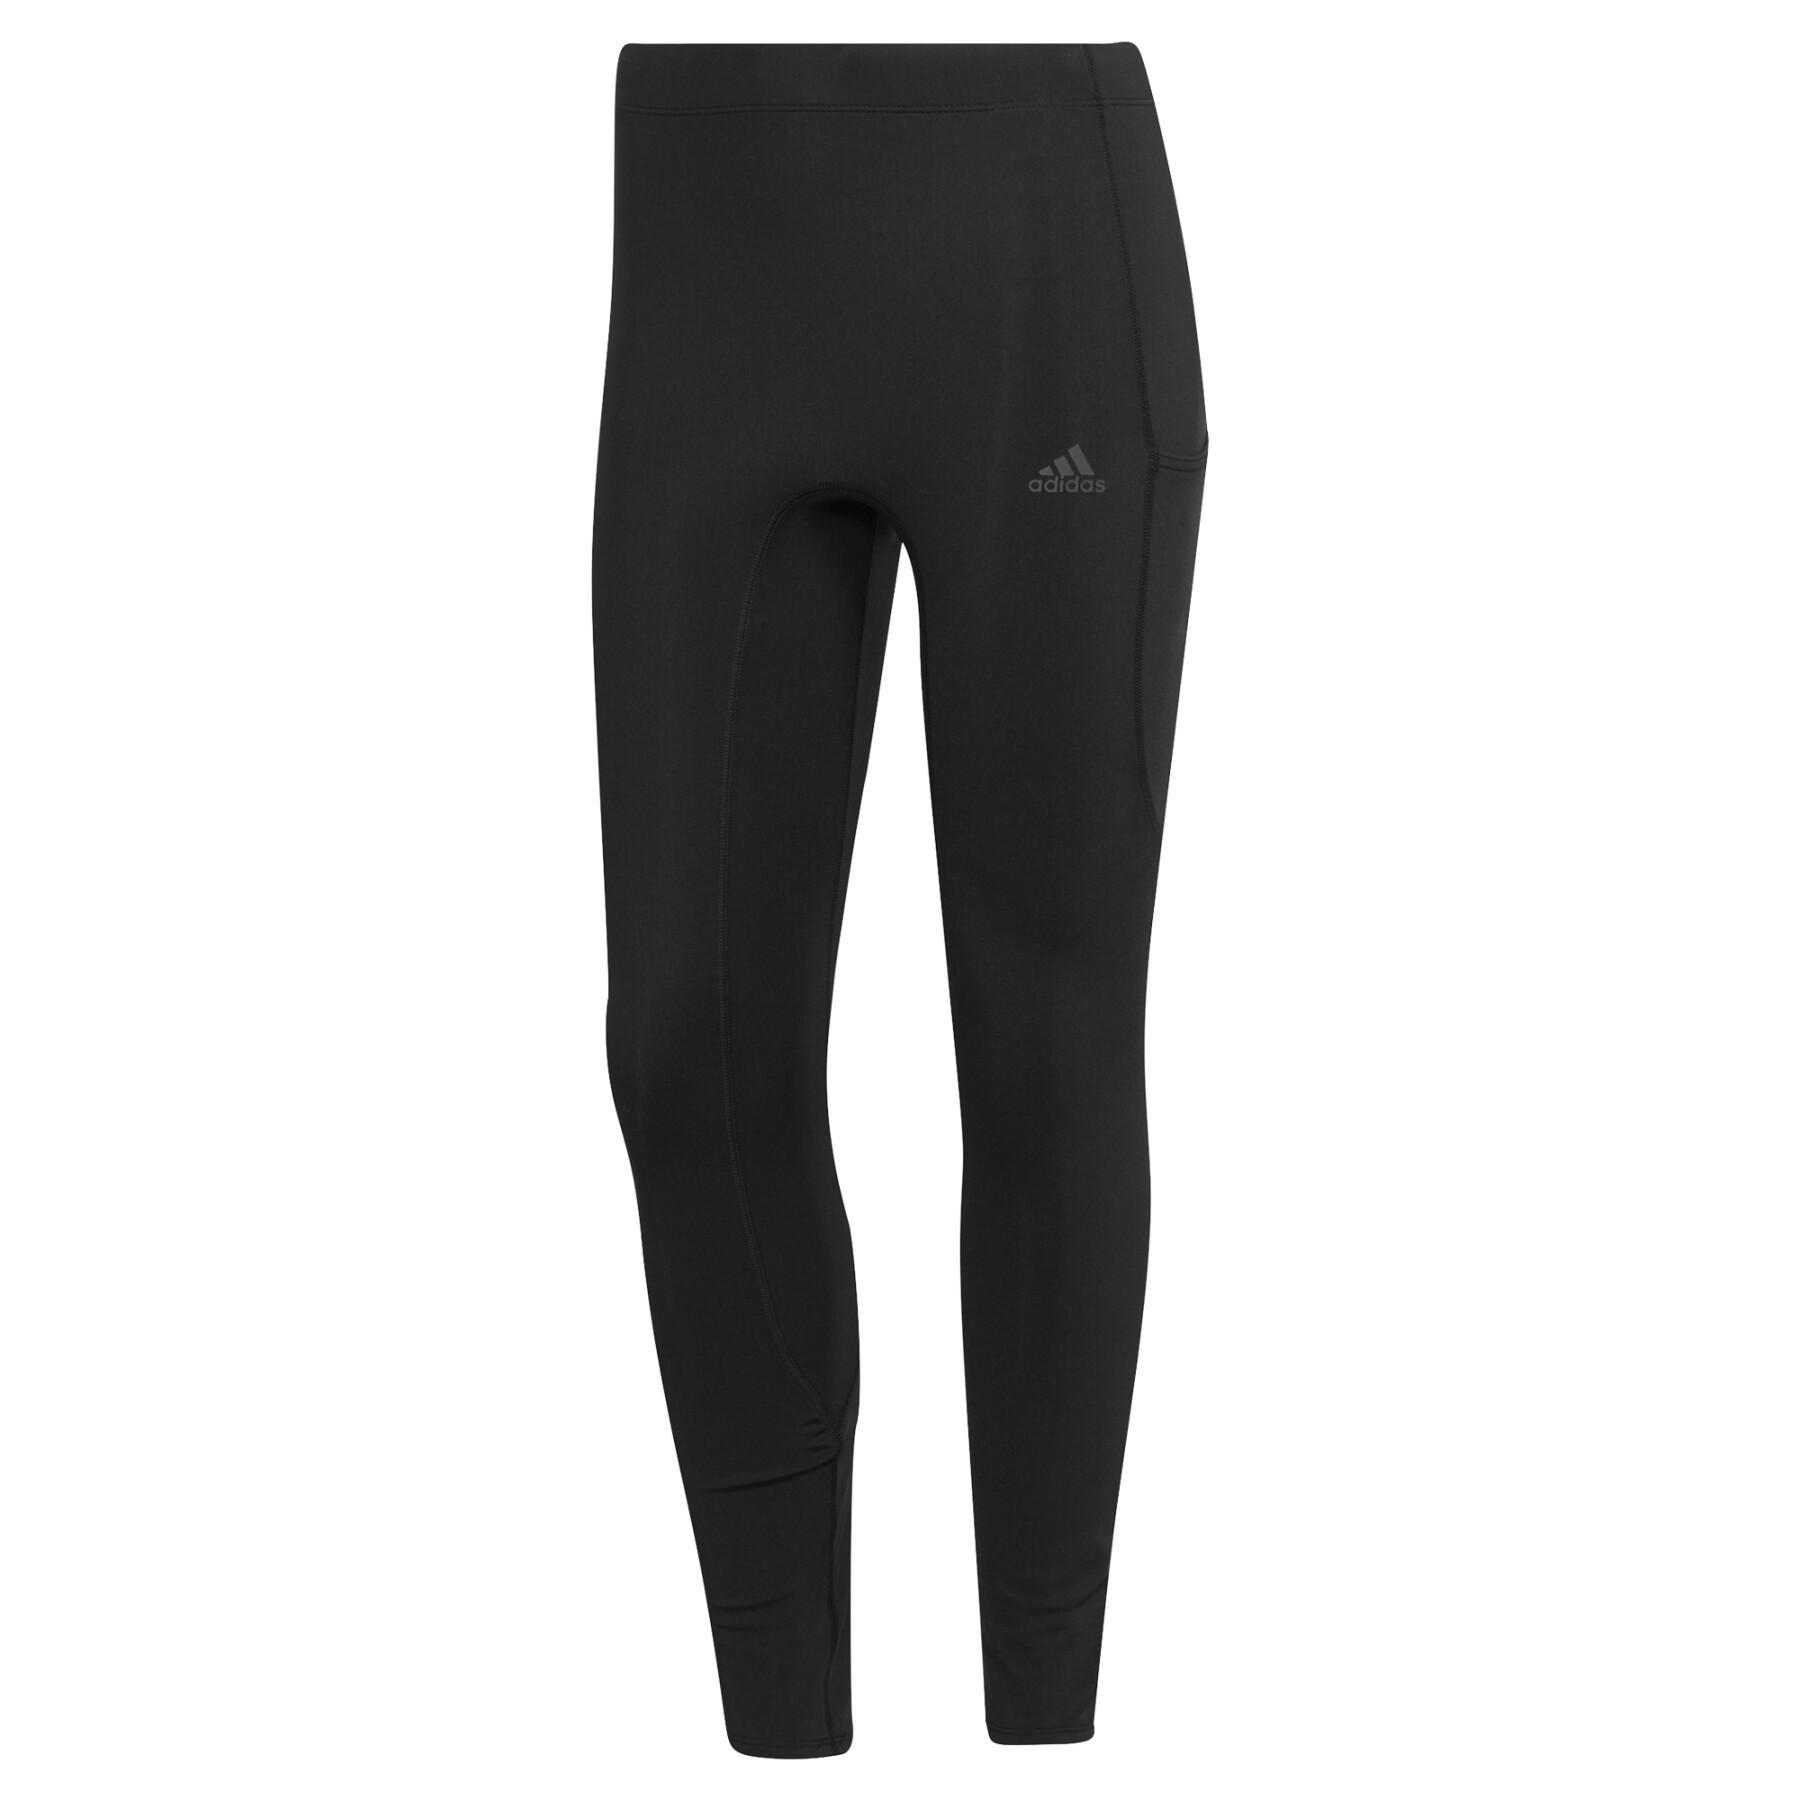 Women's leggings adidas Fastimpact Hi-Shine Running 7/8